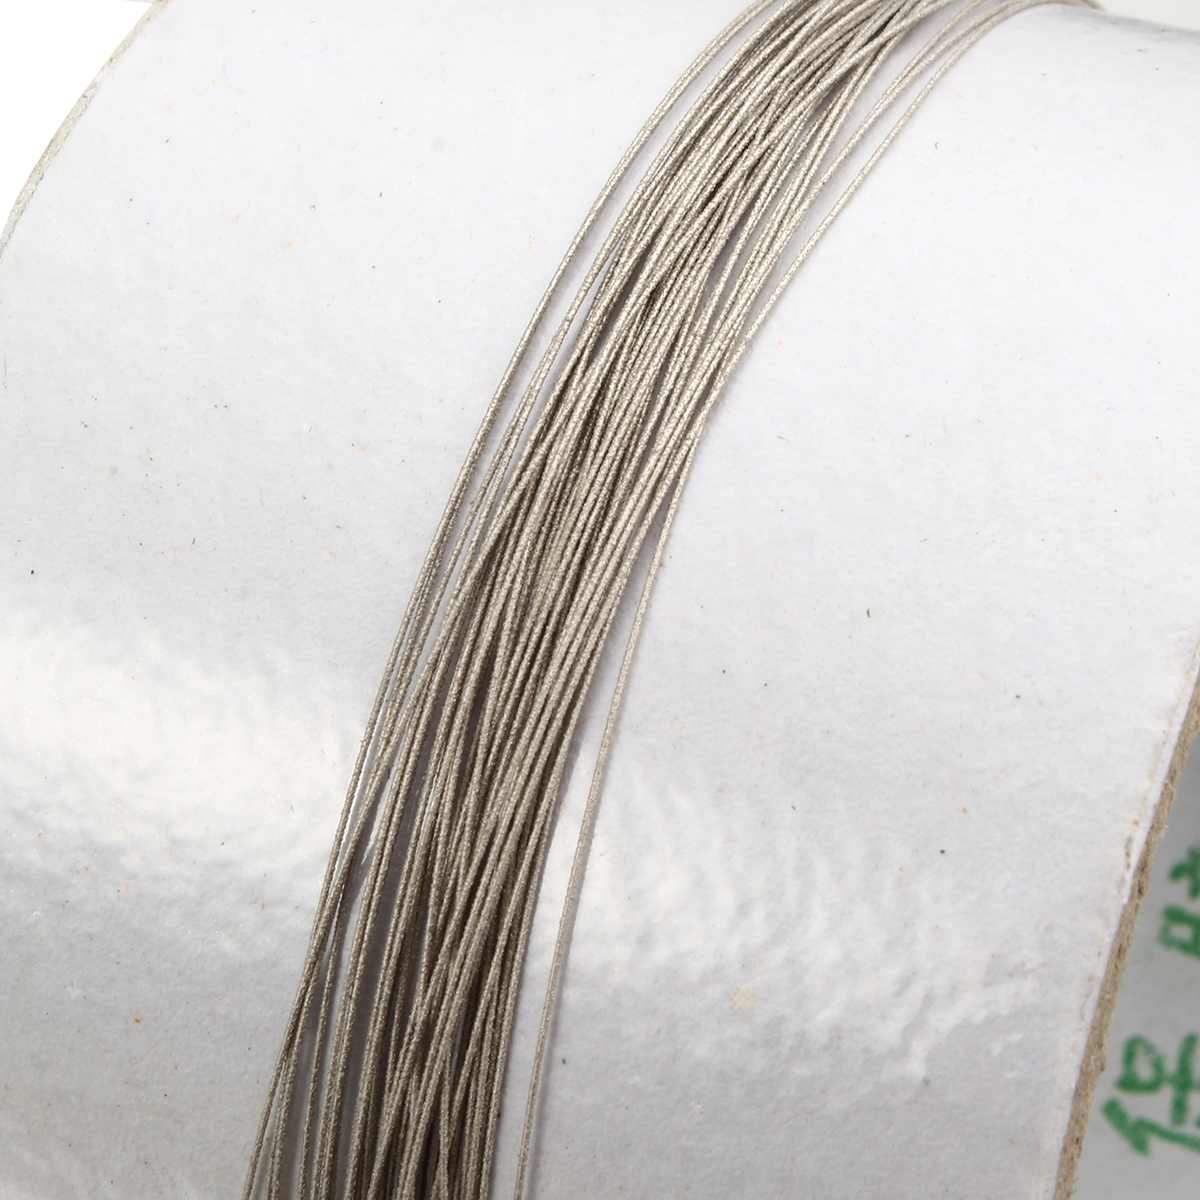 10m Length DIY Coping Cutting Saw Blades 0.35mm Diamond Cutting Wire Metal Wire Diamond Emery Jade Metal Stone Glass